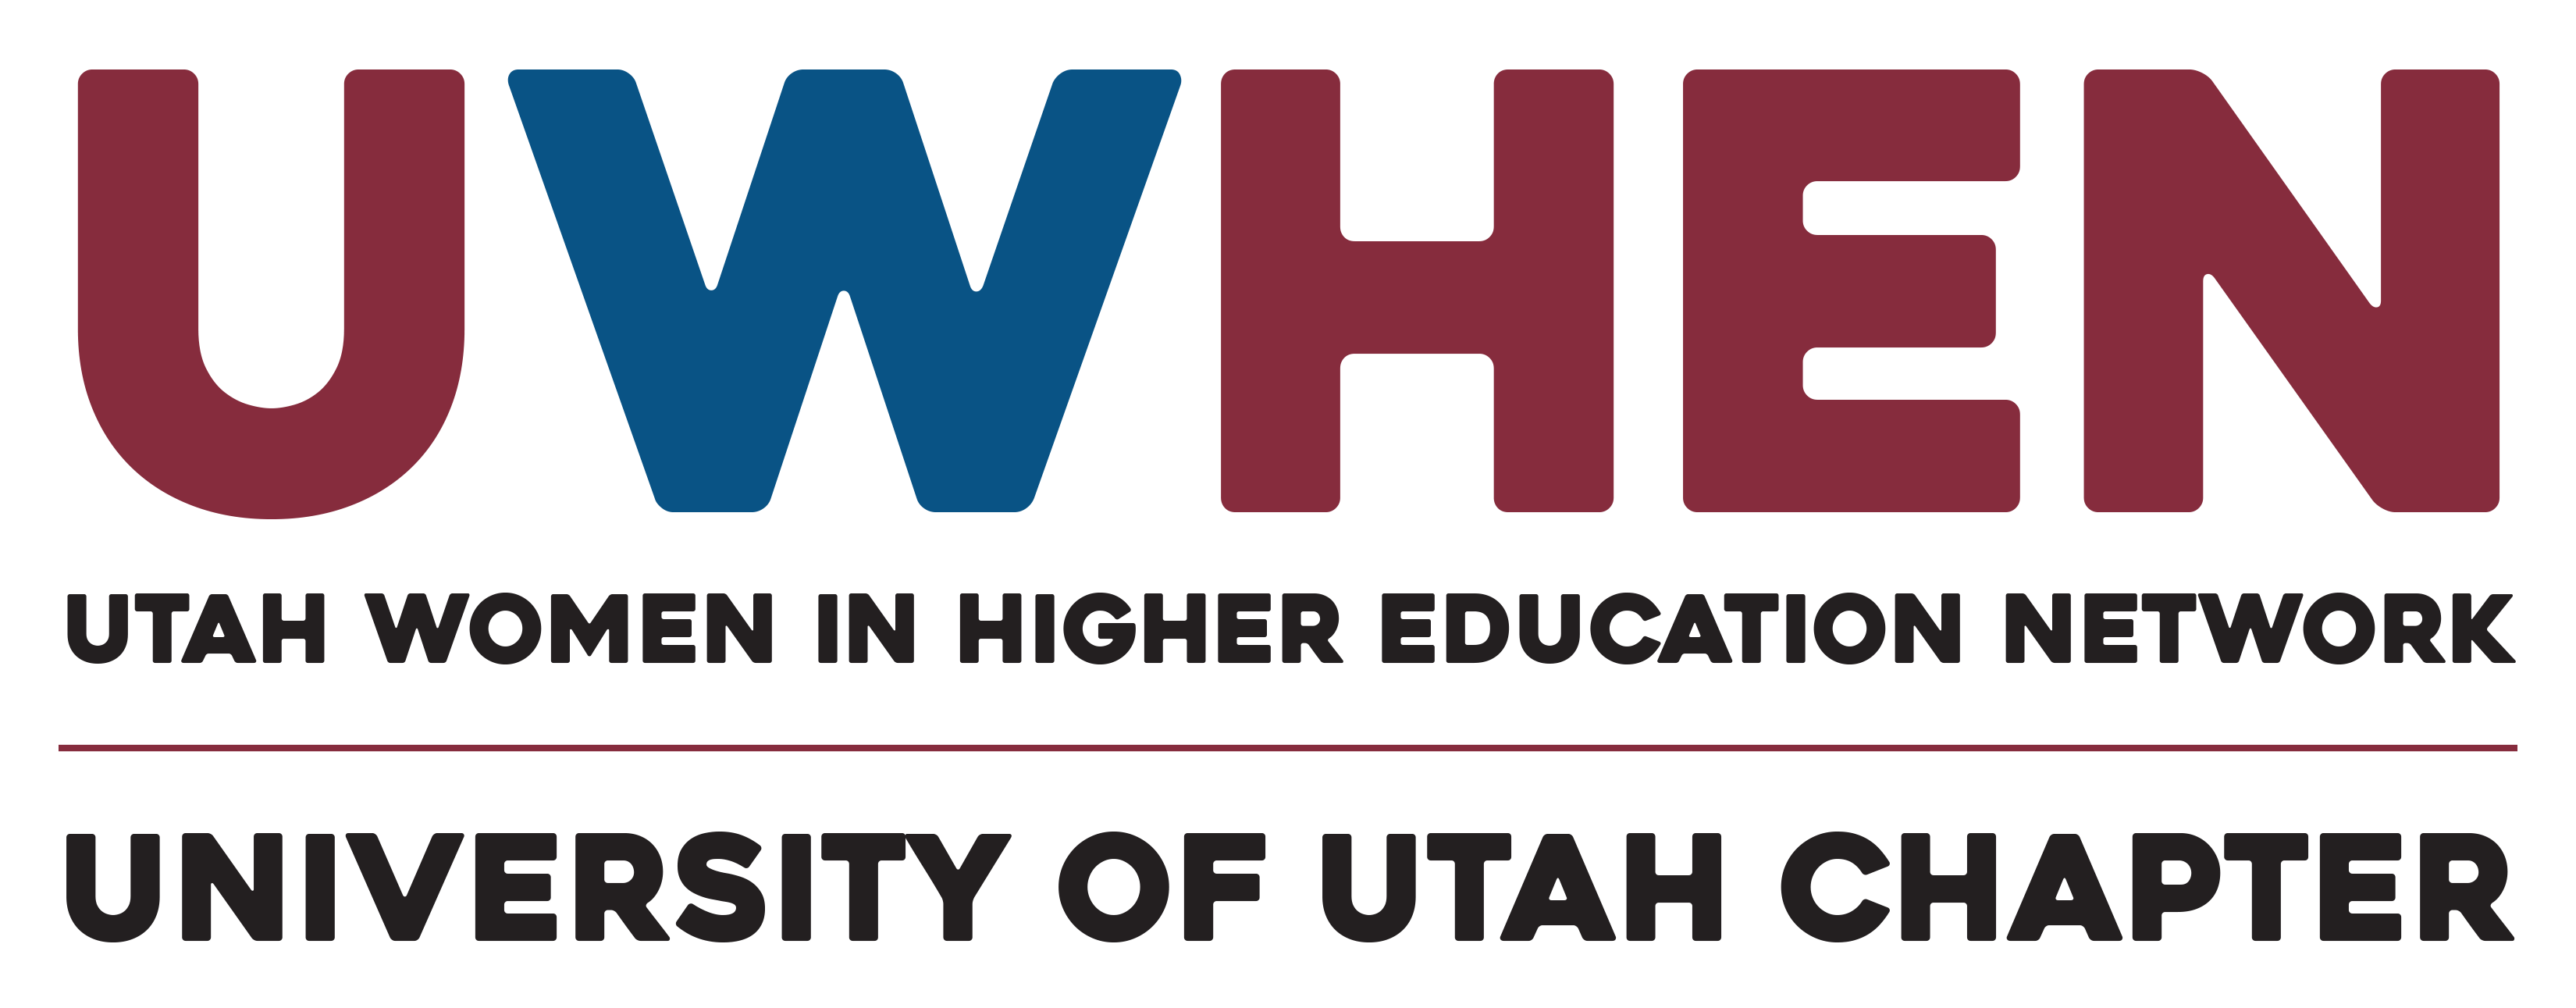 UWHEN University of Utah Chapter logo